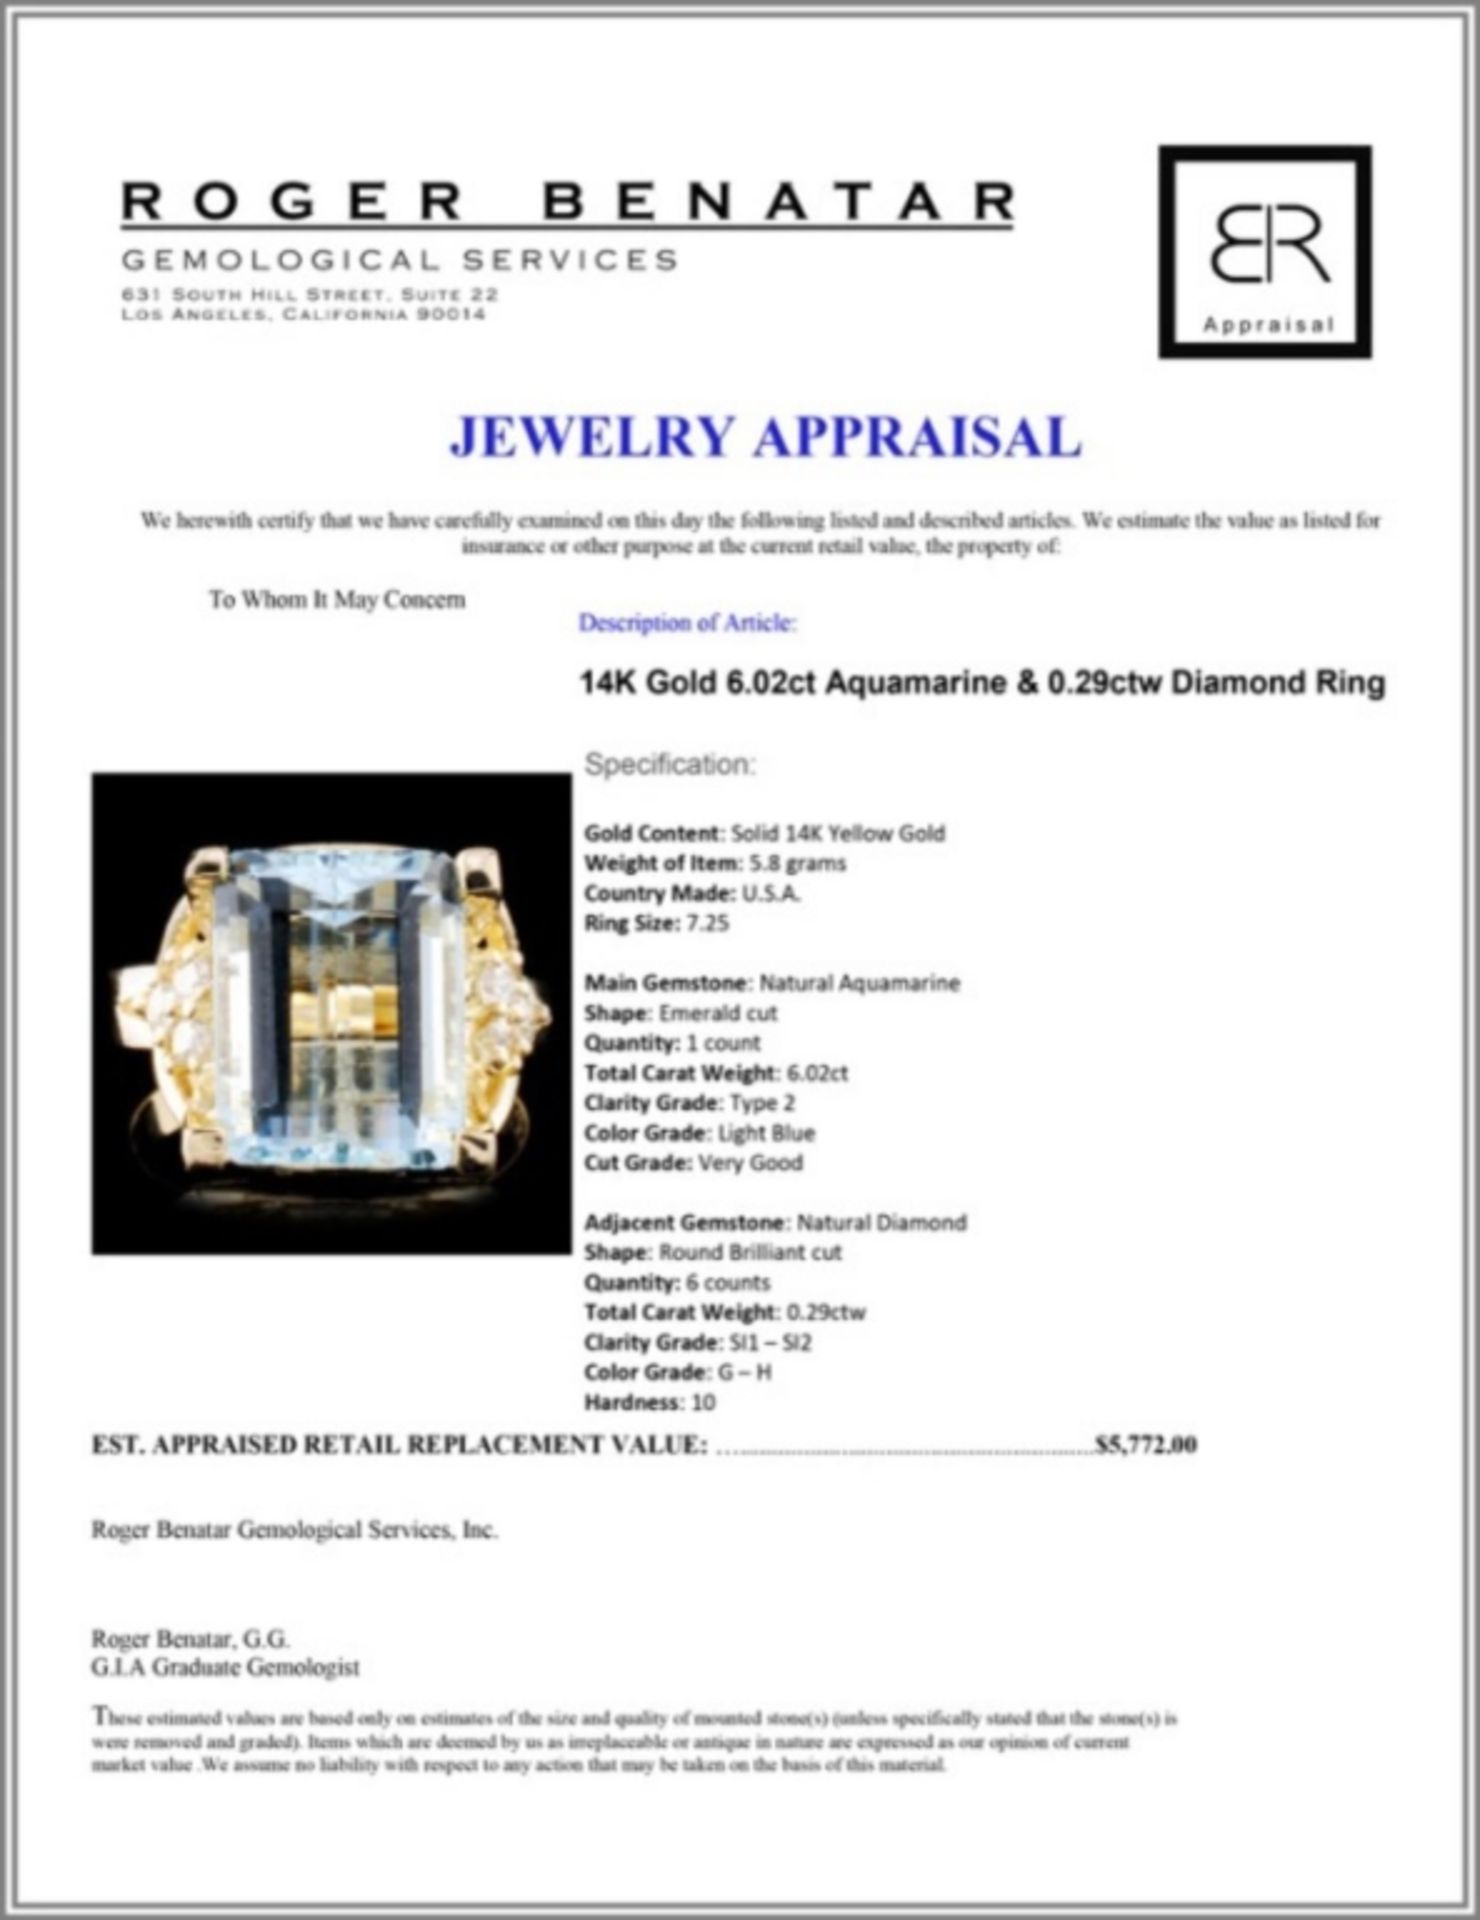 14K Gold 6.02ct Aquamarine & 0.29ctw Diamond Ring - Image 4 of 4